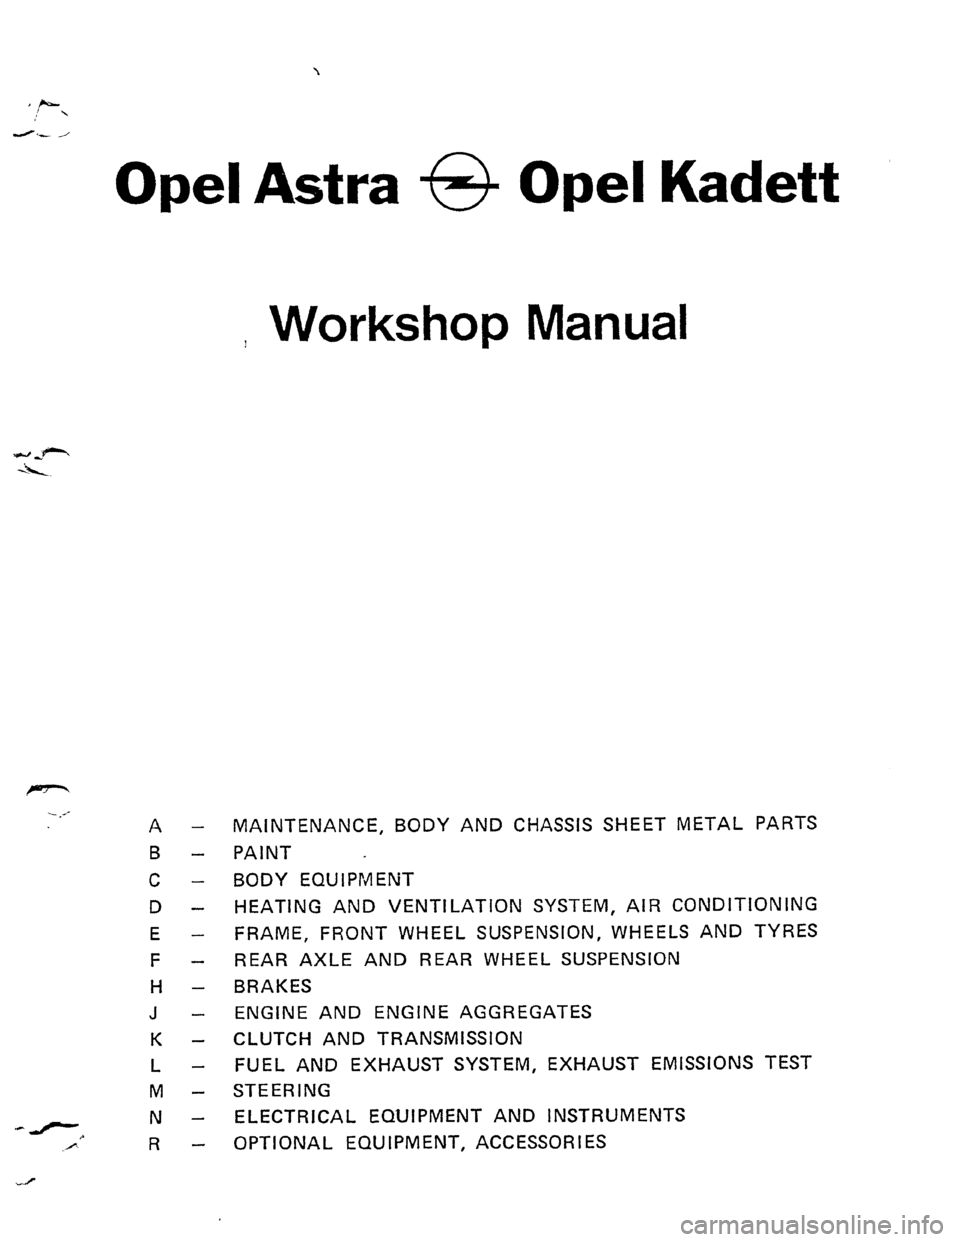 OPEL KADETT 1991  Electronic Workshop Manual Downloaded from www.Manualslib.com manuals search engine   